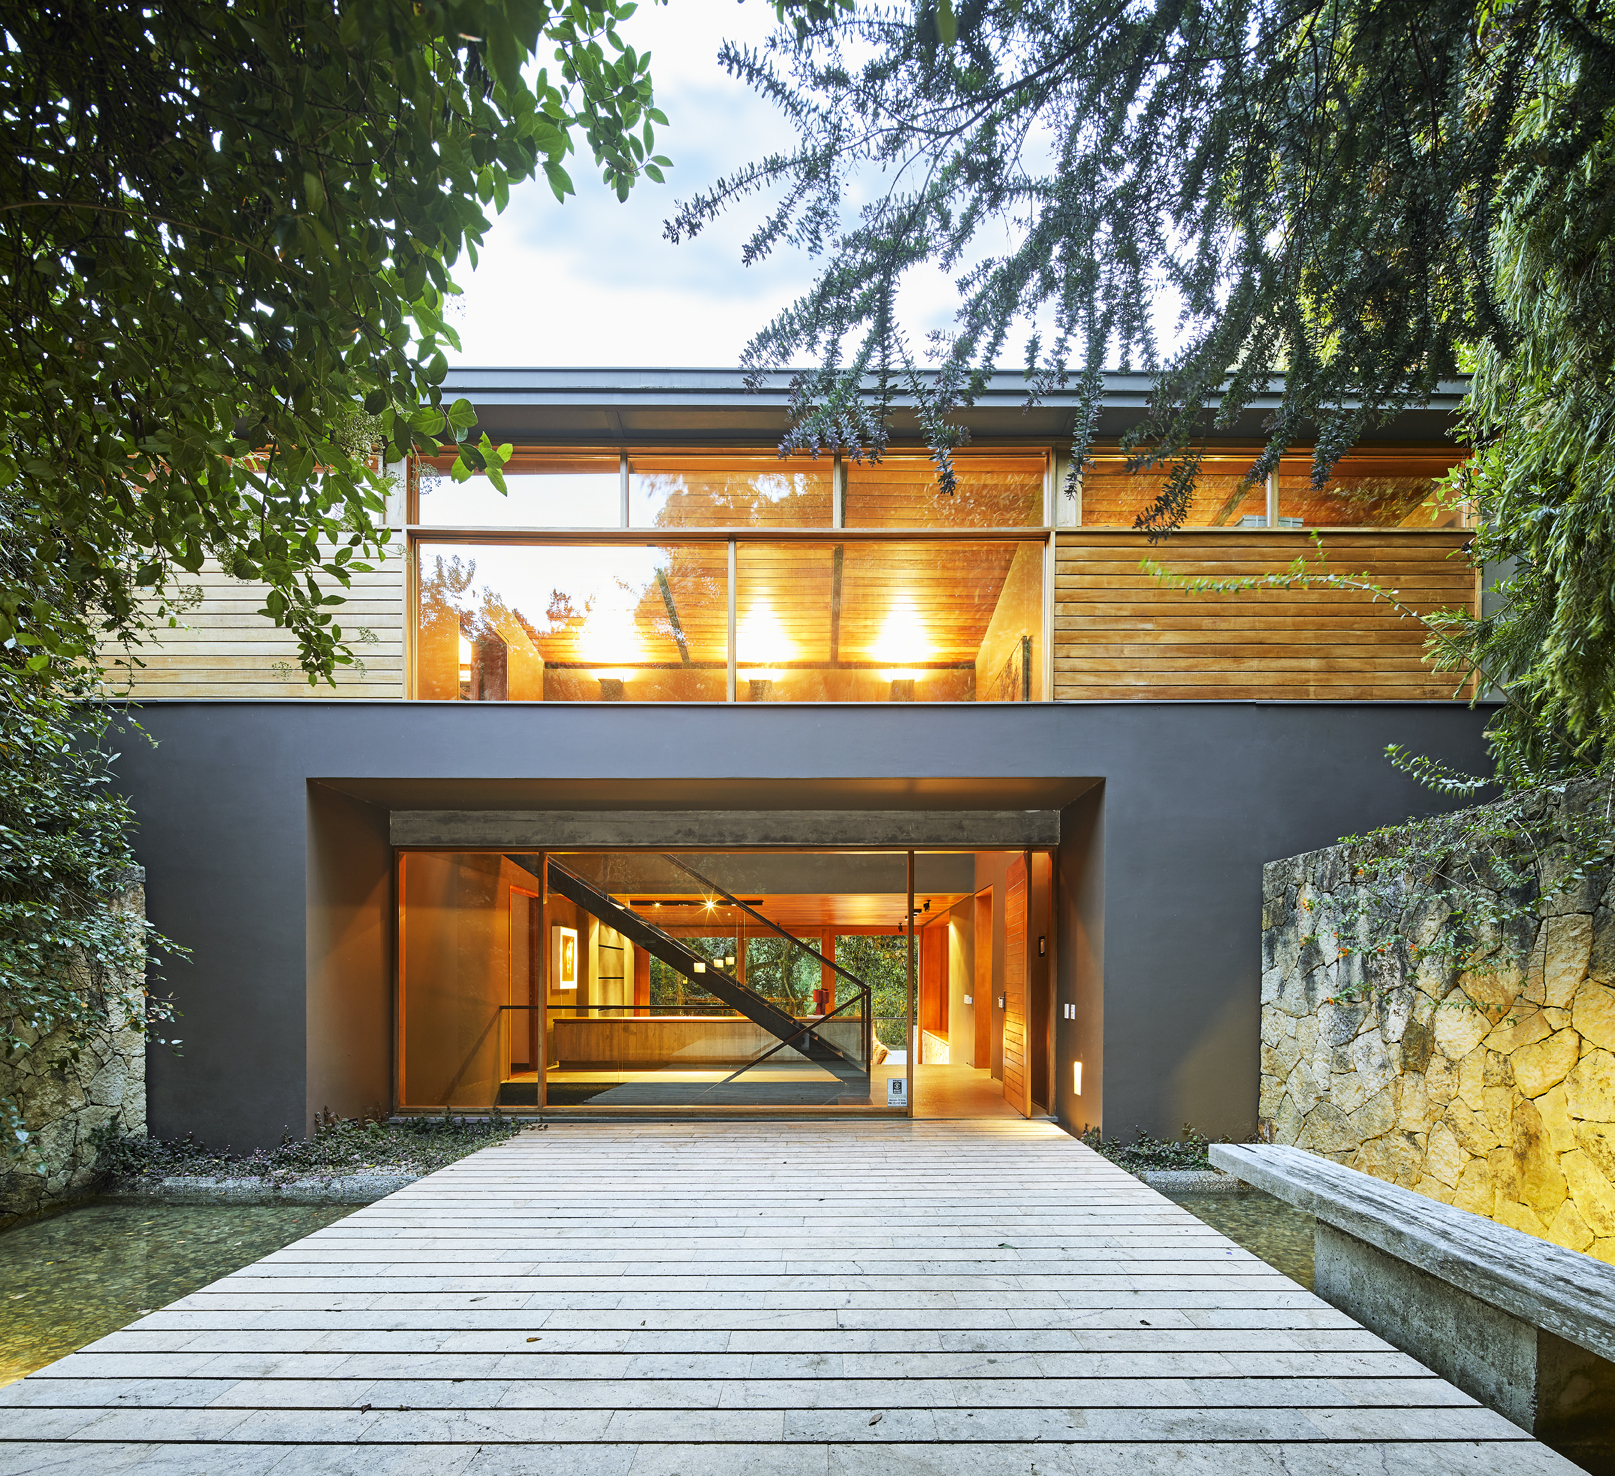 Conozca esta casa increíble construida entre las montañas cerca a Bogotá